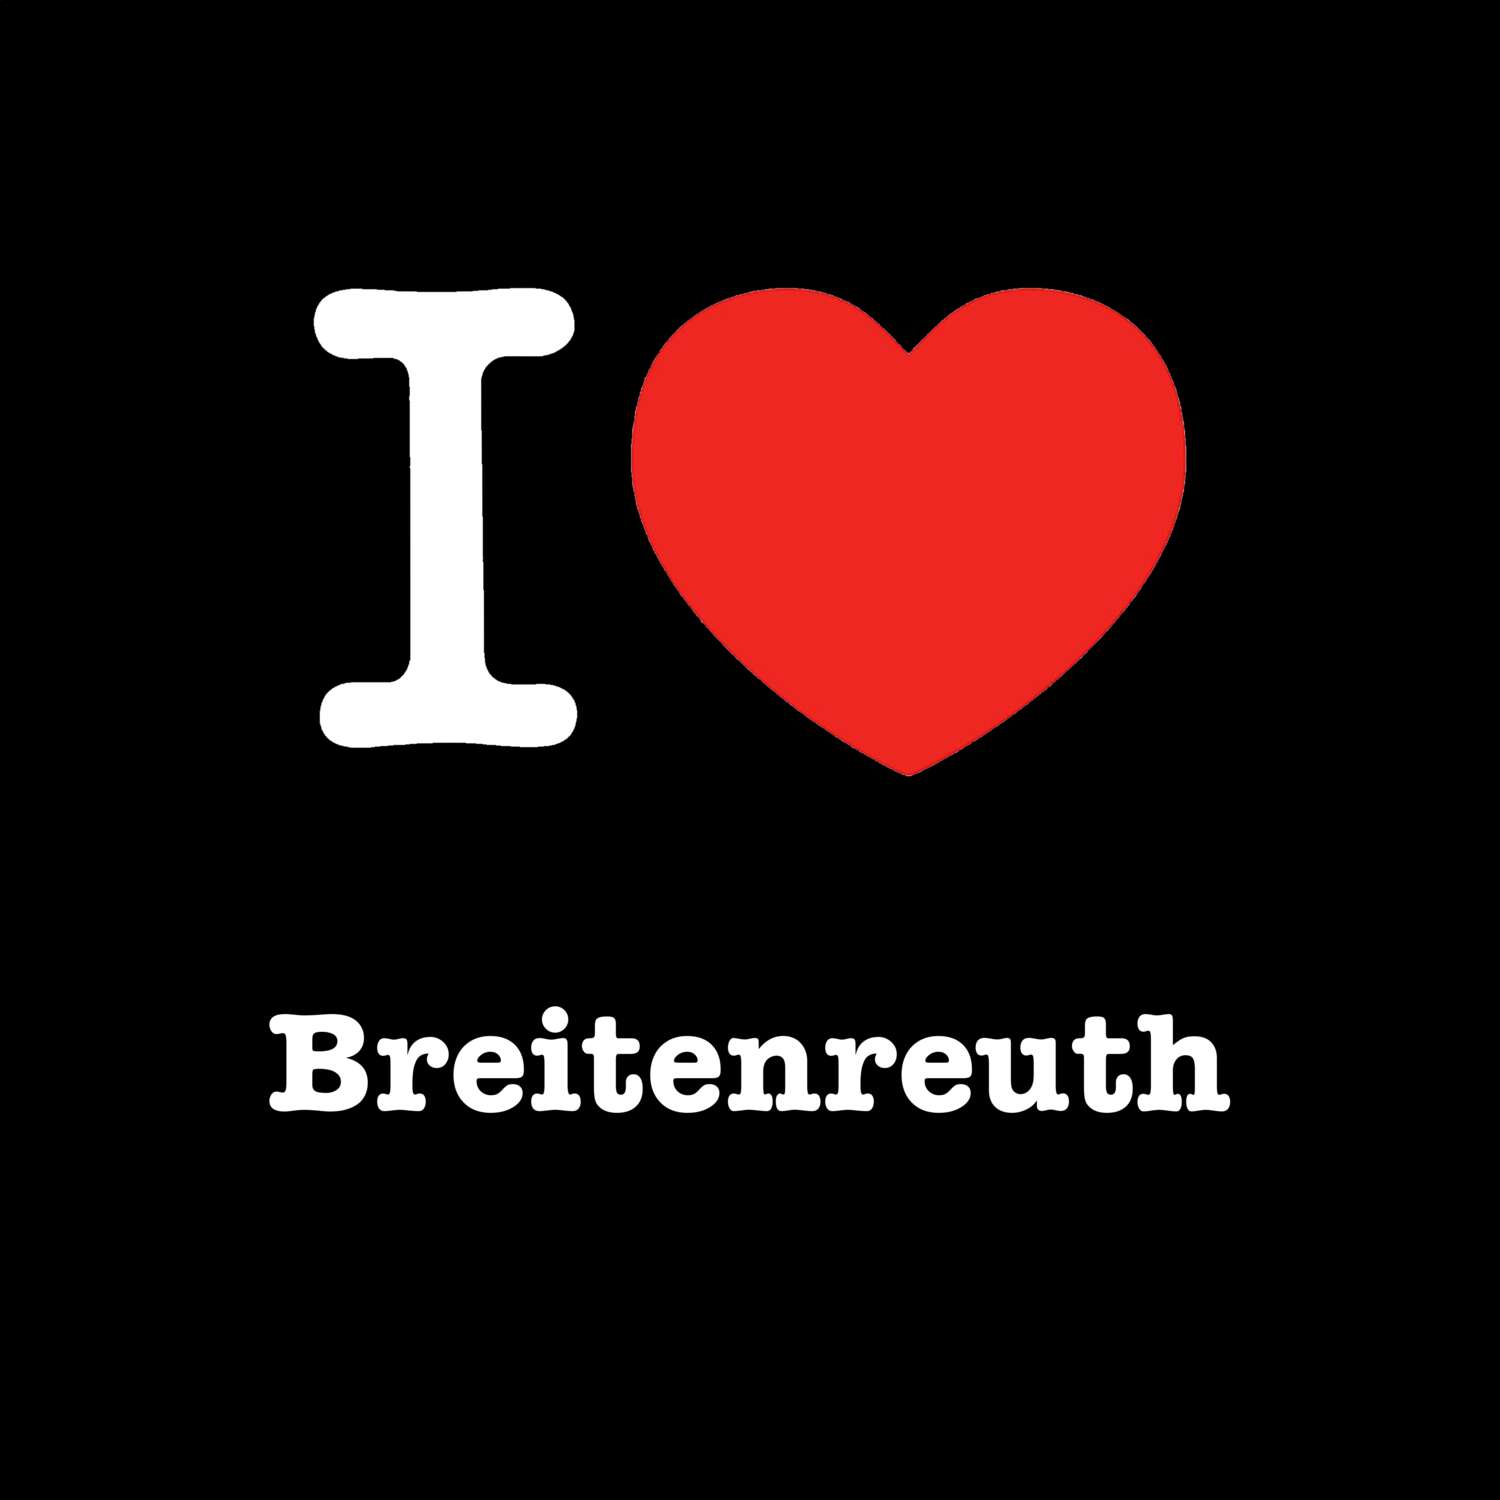 Breitenreuth T-Shirt »I love«